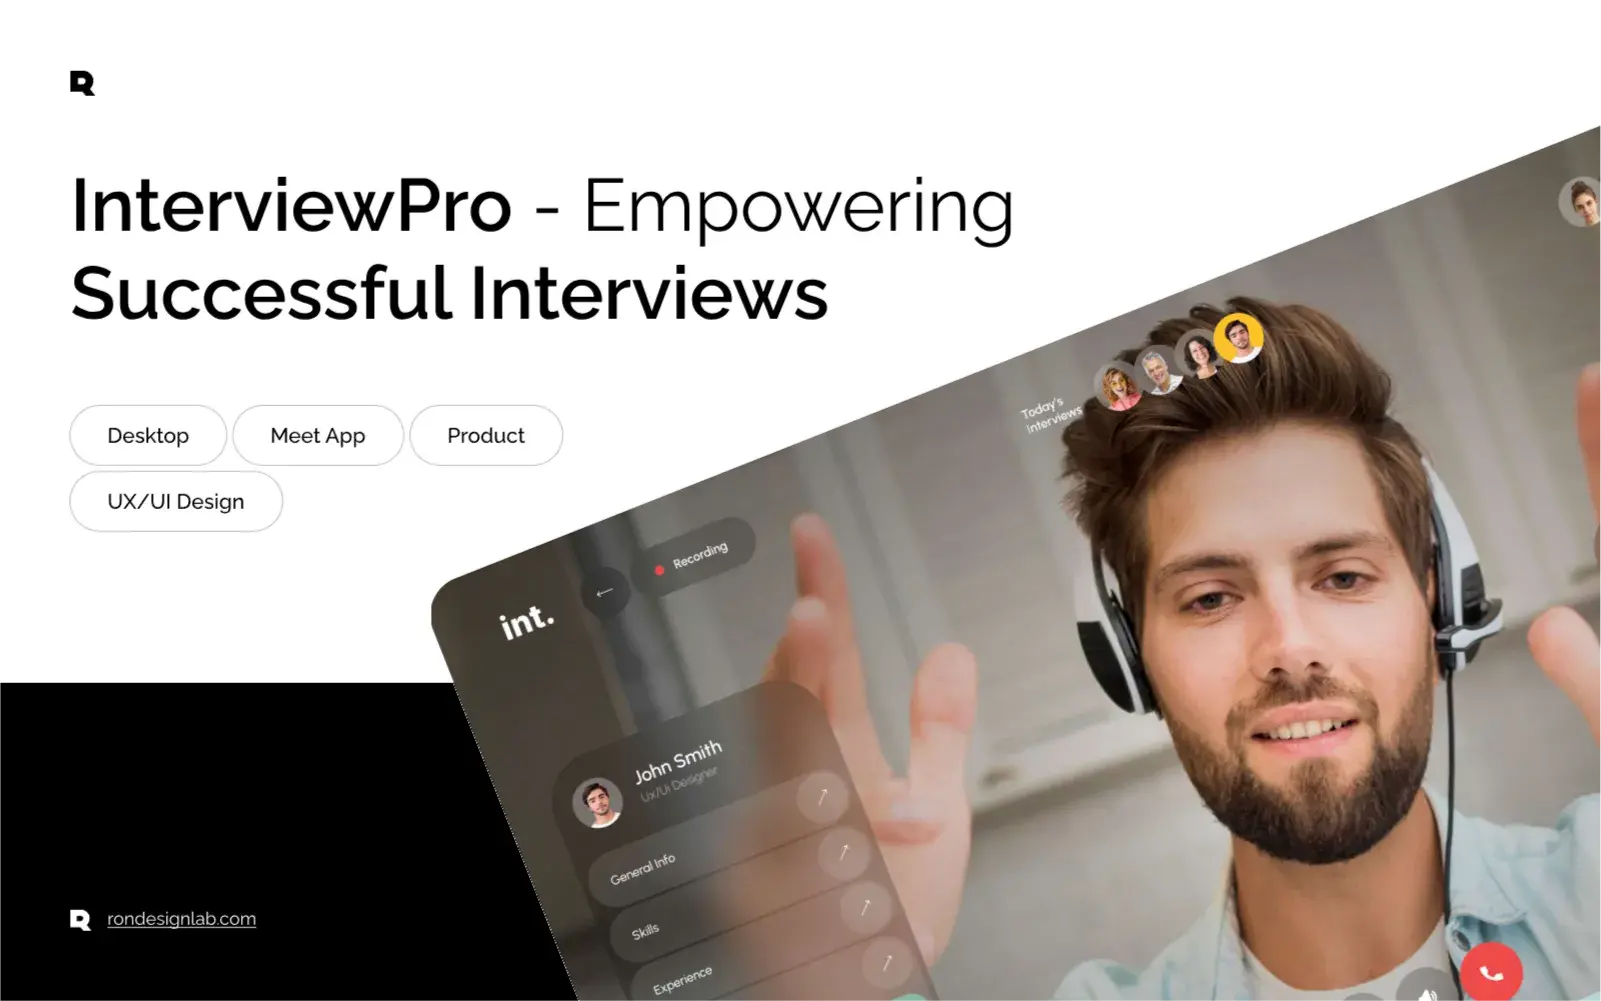 InterviewPro - Empowering Successful Interviews - Business